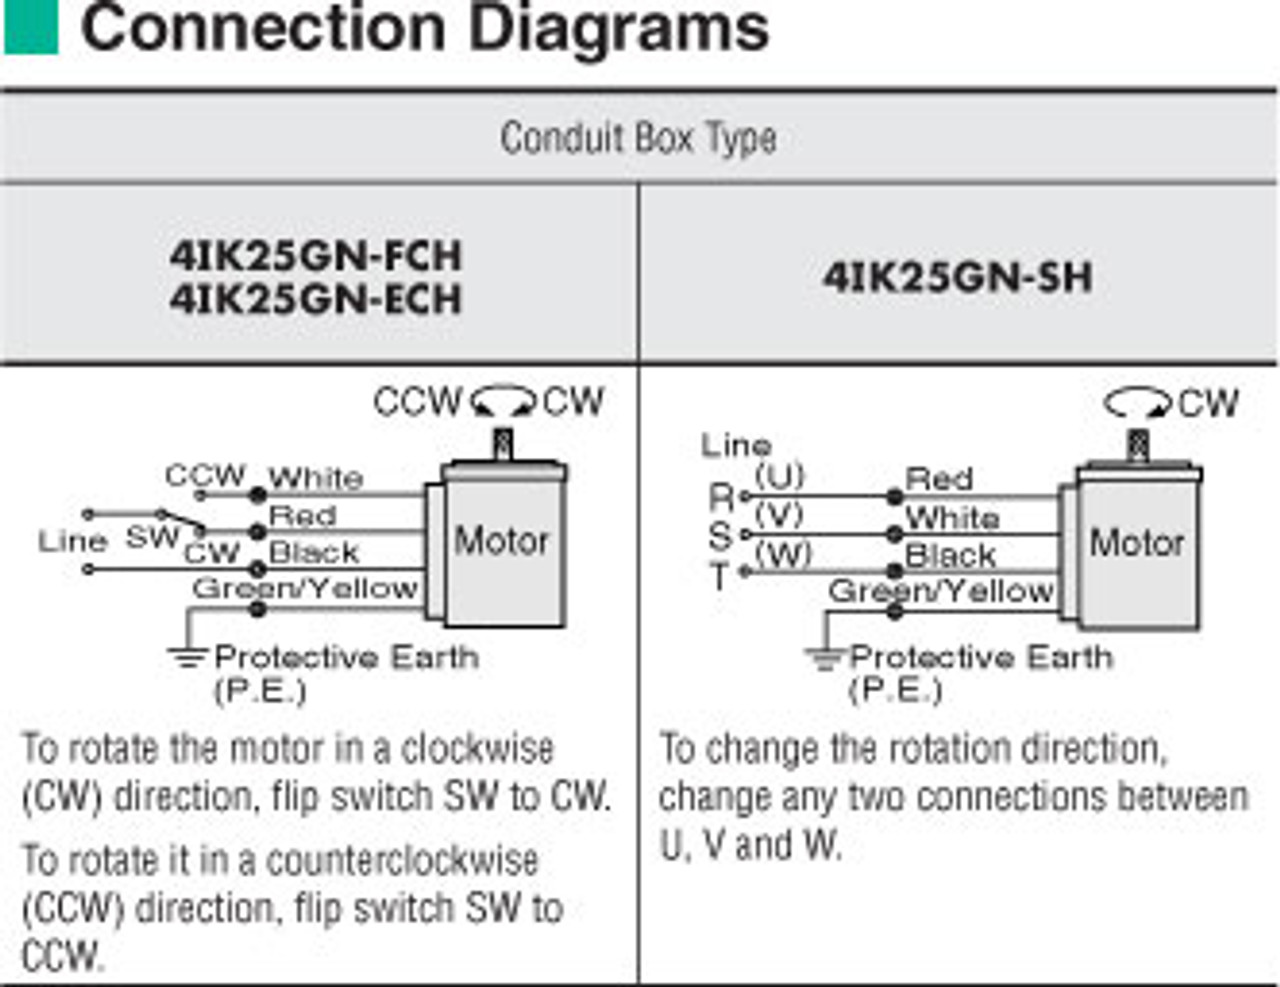 4IK25GN-ECH / 4GN36SA - Connection